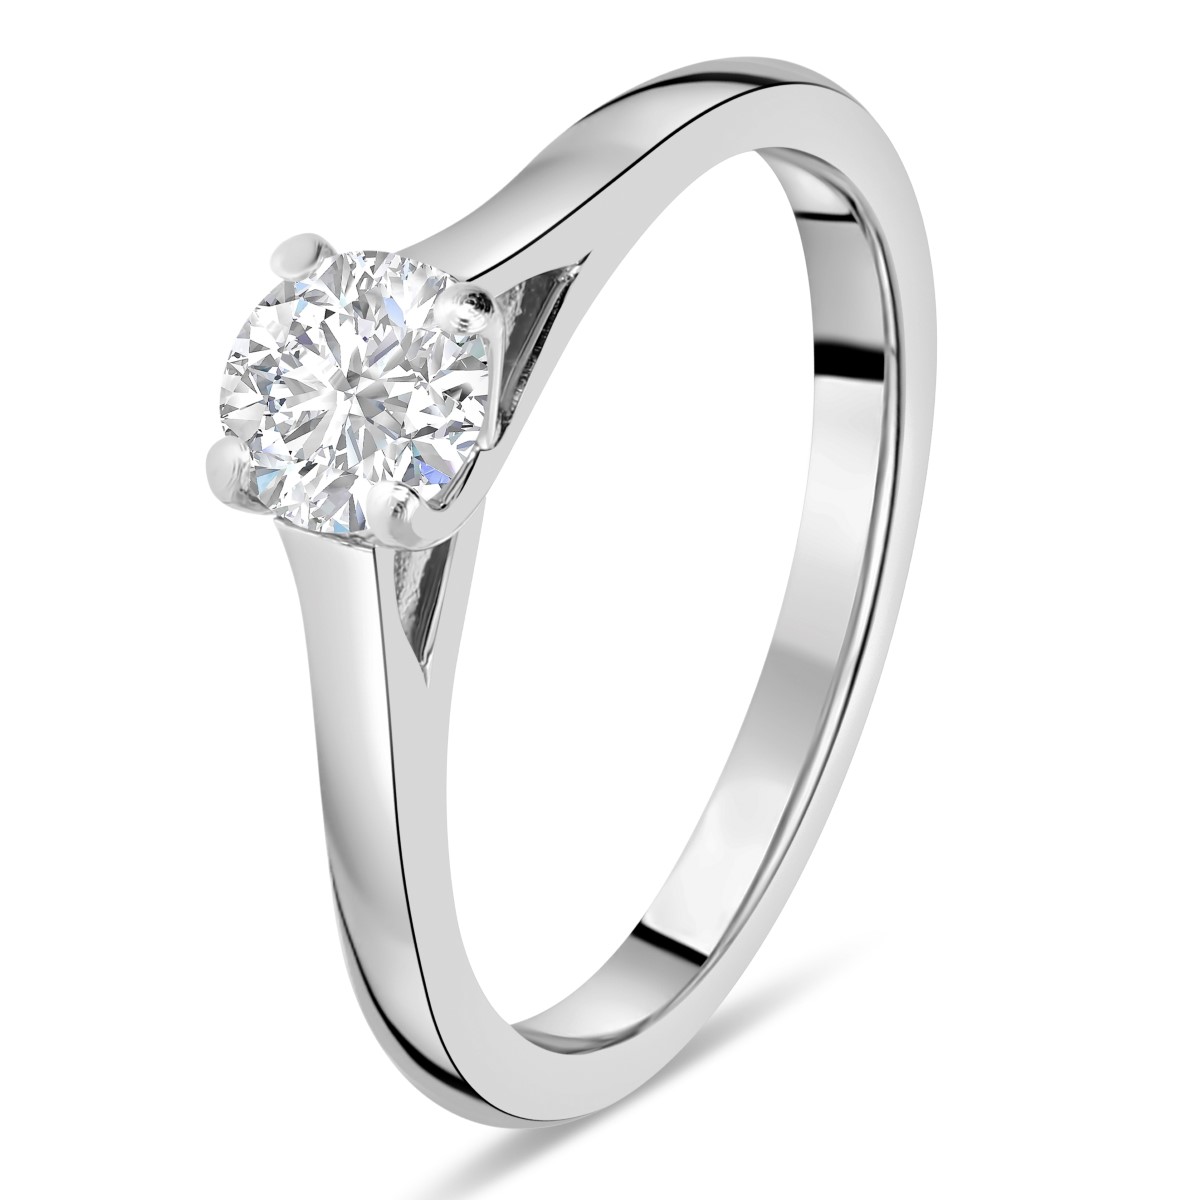 st-martin-solitaires-diamants-certifies-style-classique-platine-950-